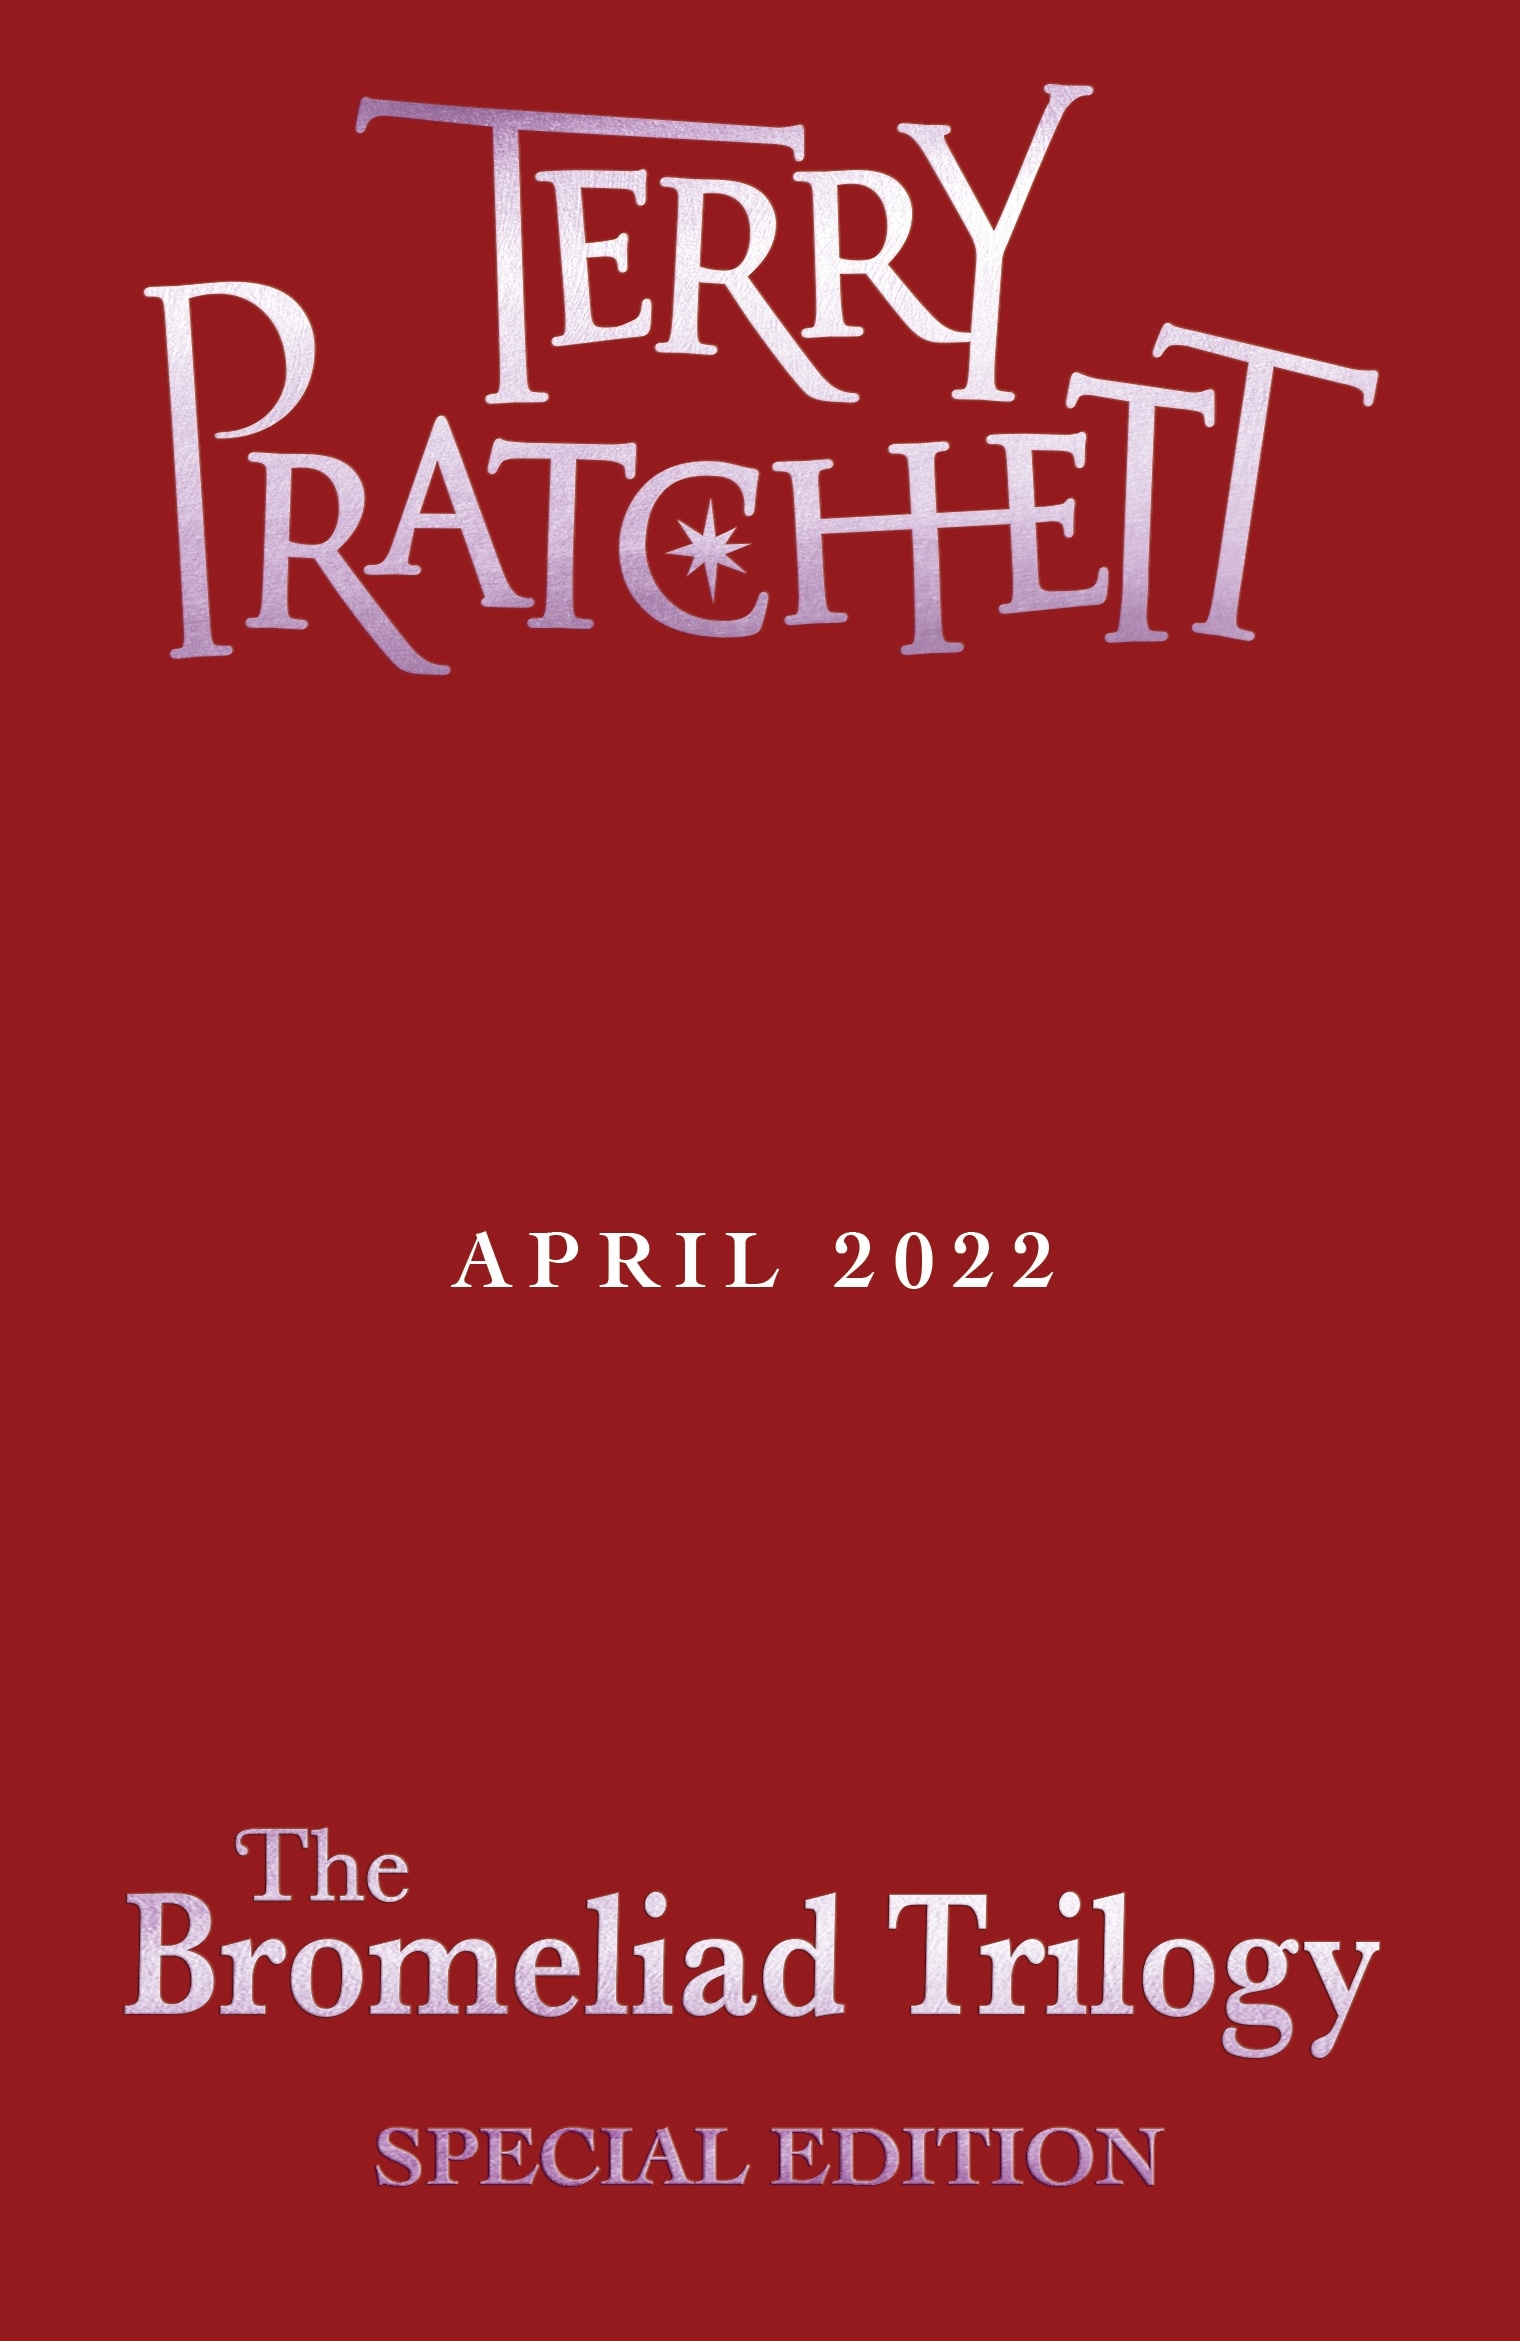 Book “The Bromeliad Trilogy” by Terry Pratchett — April 14, 2022